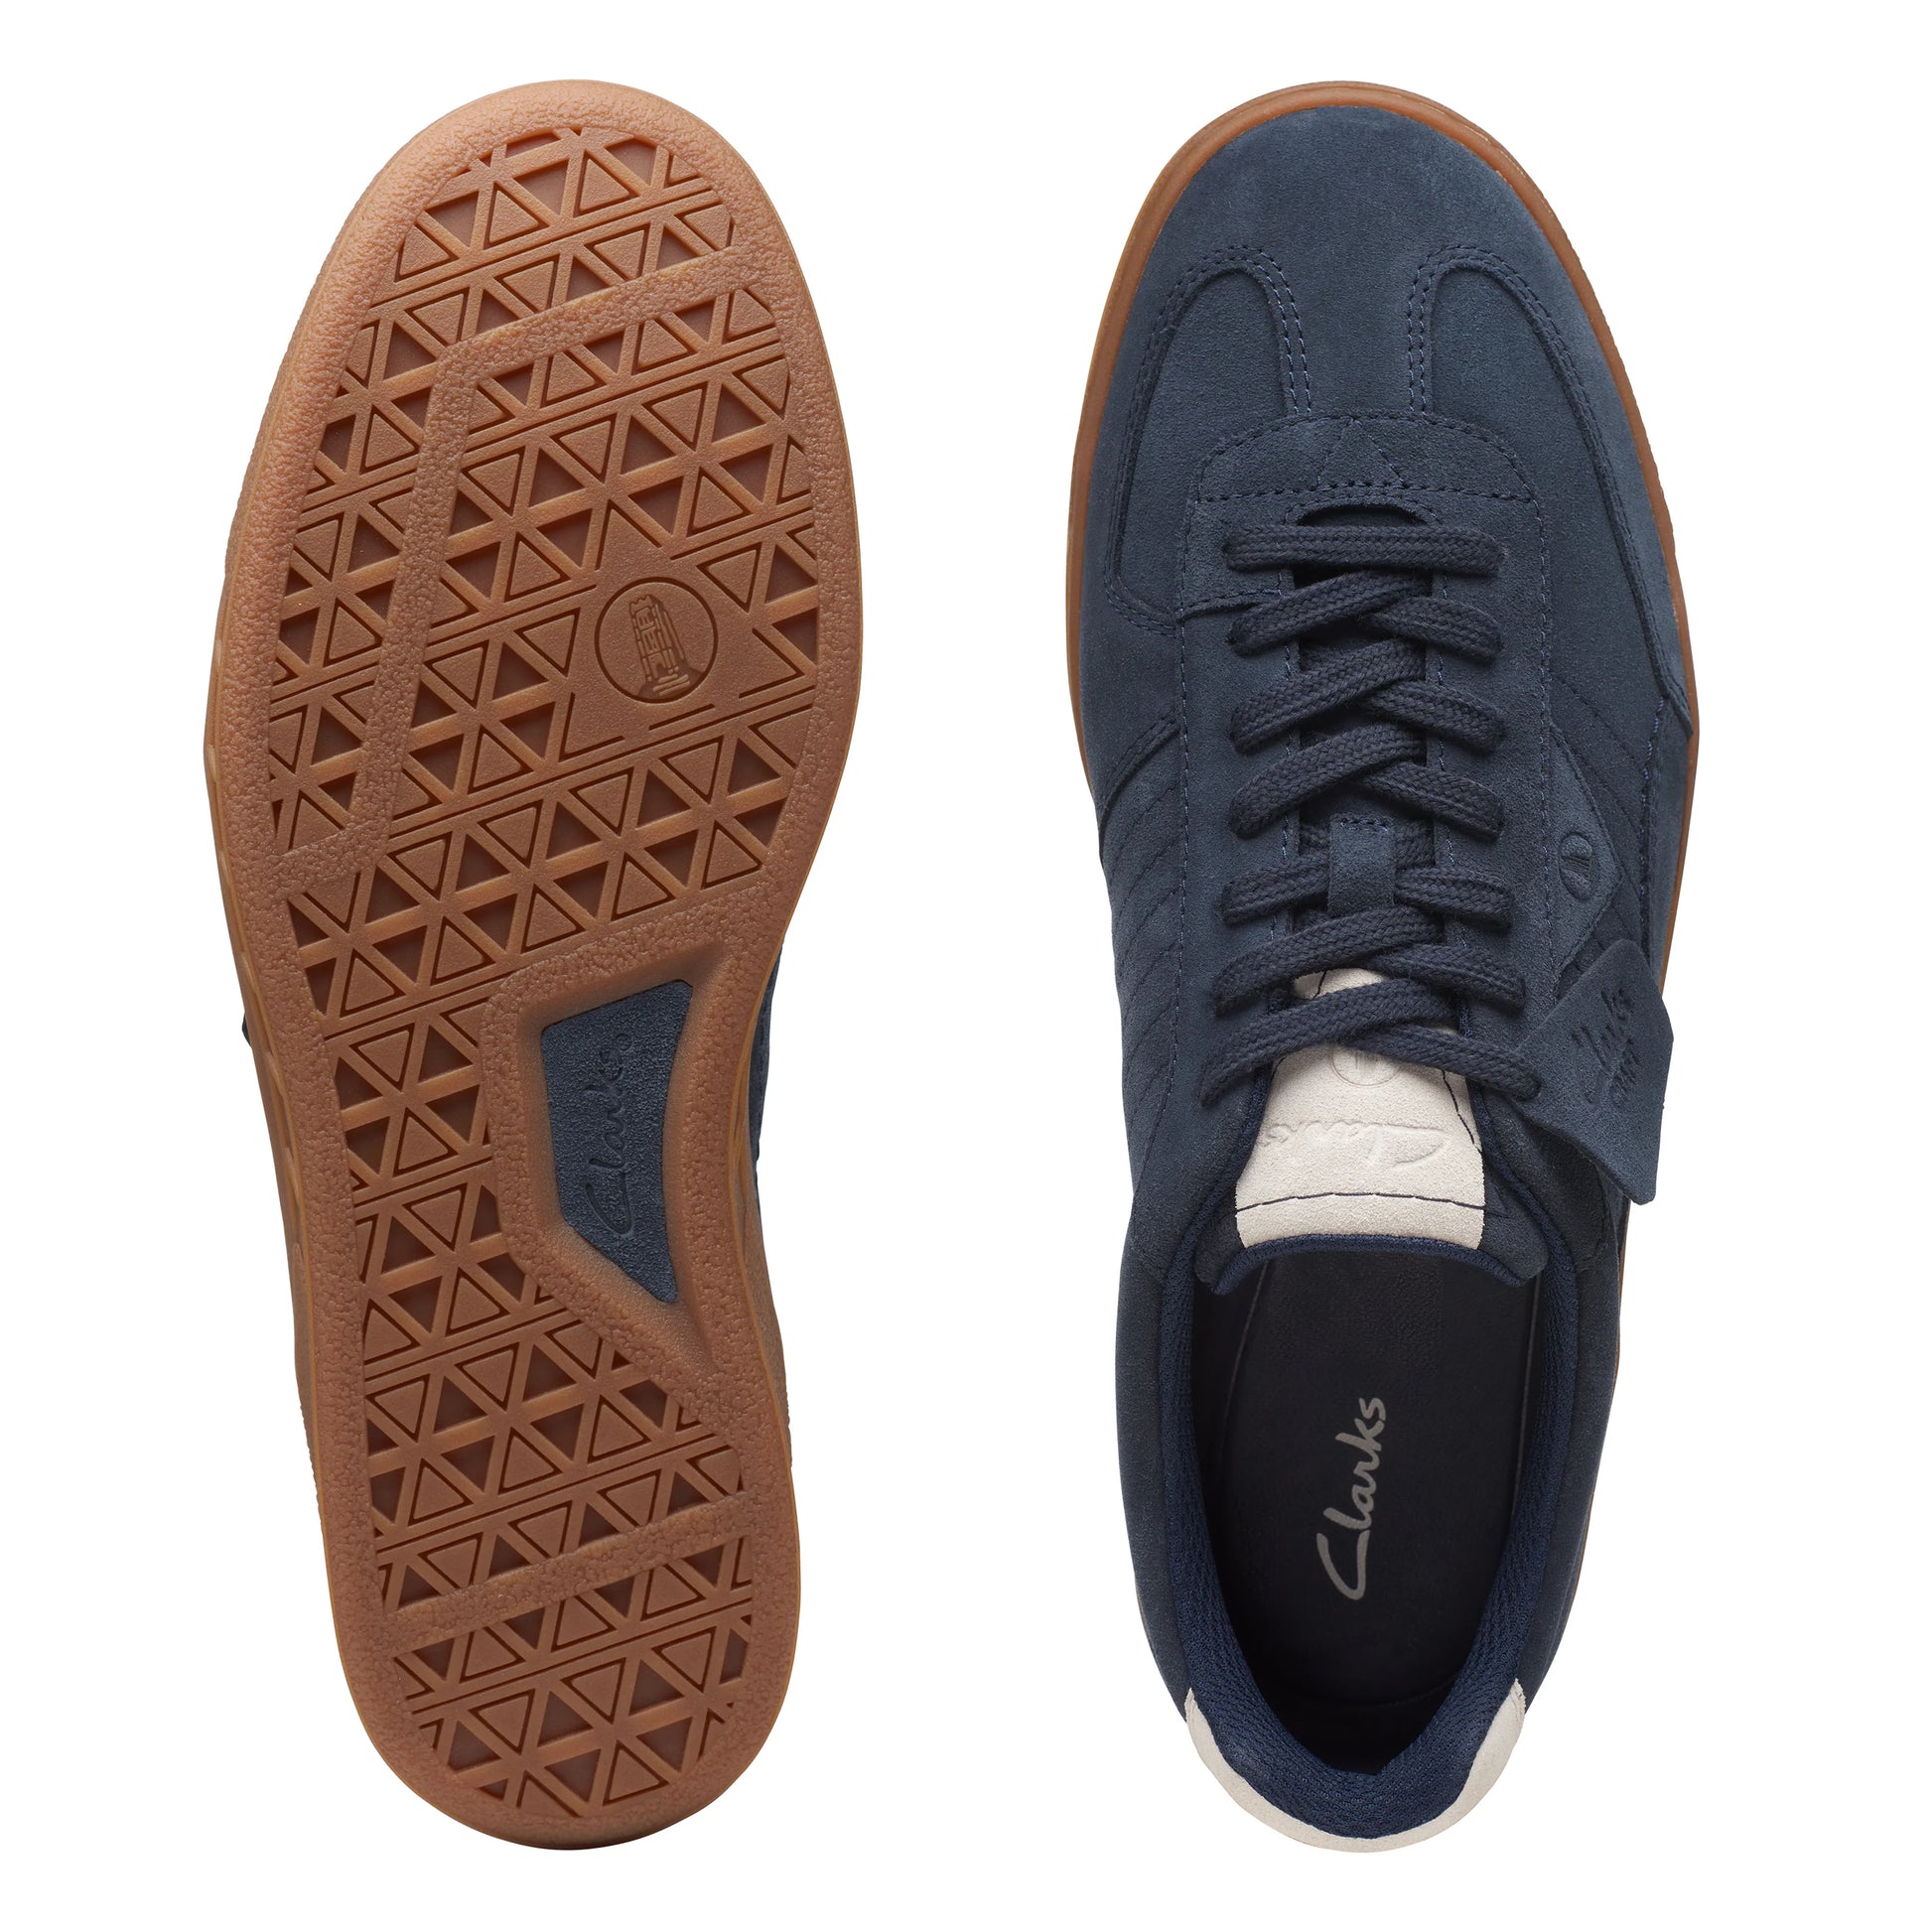 Sneakers De La Marca Clarks Para Hombre Modelo Craftrally Ace NavyEn Color Azul